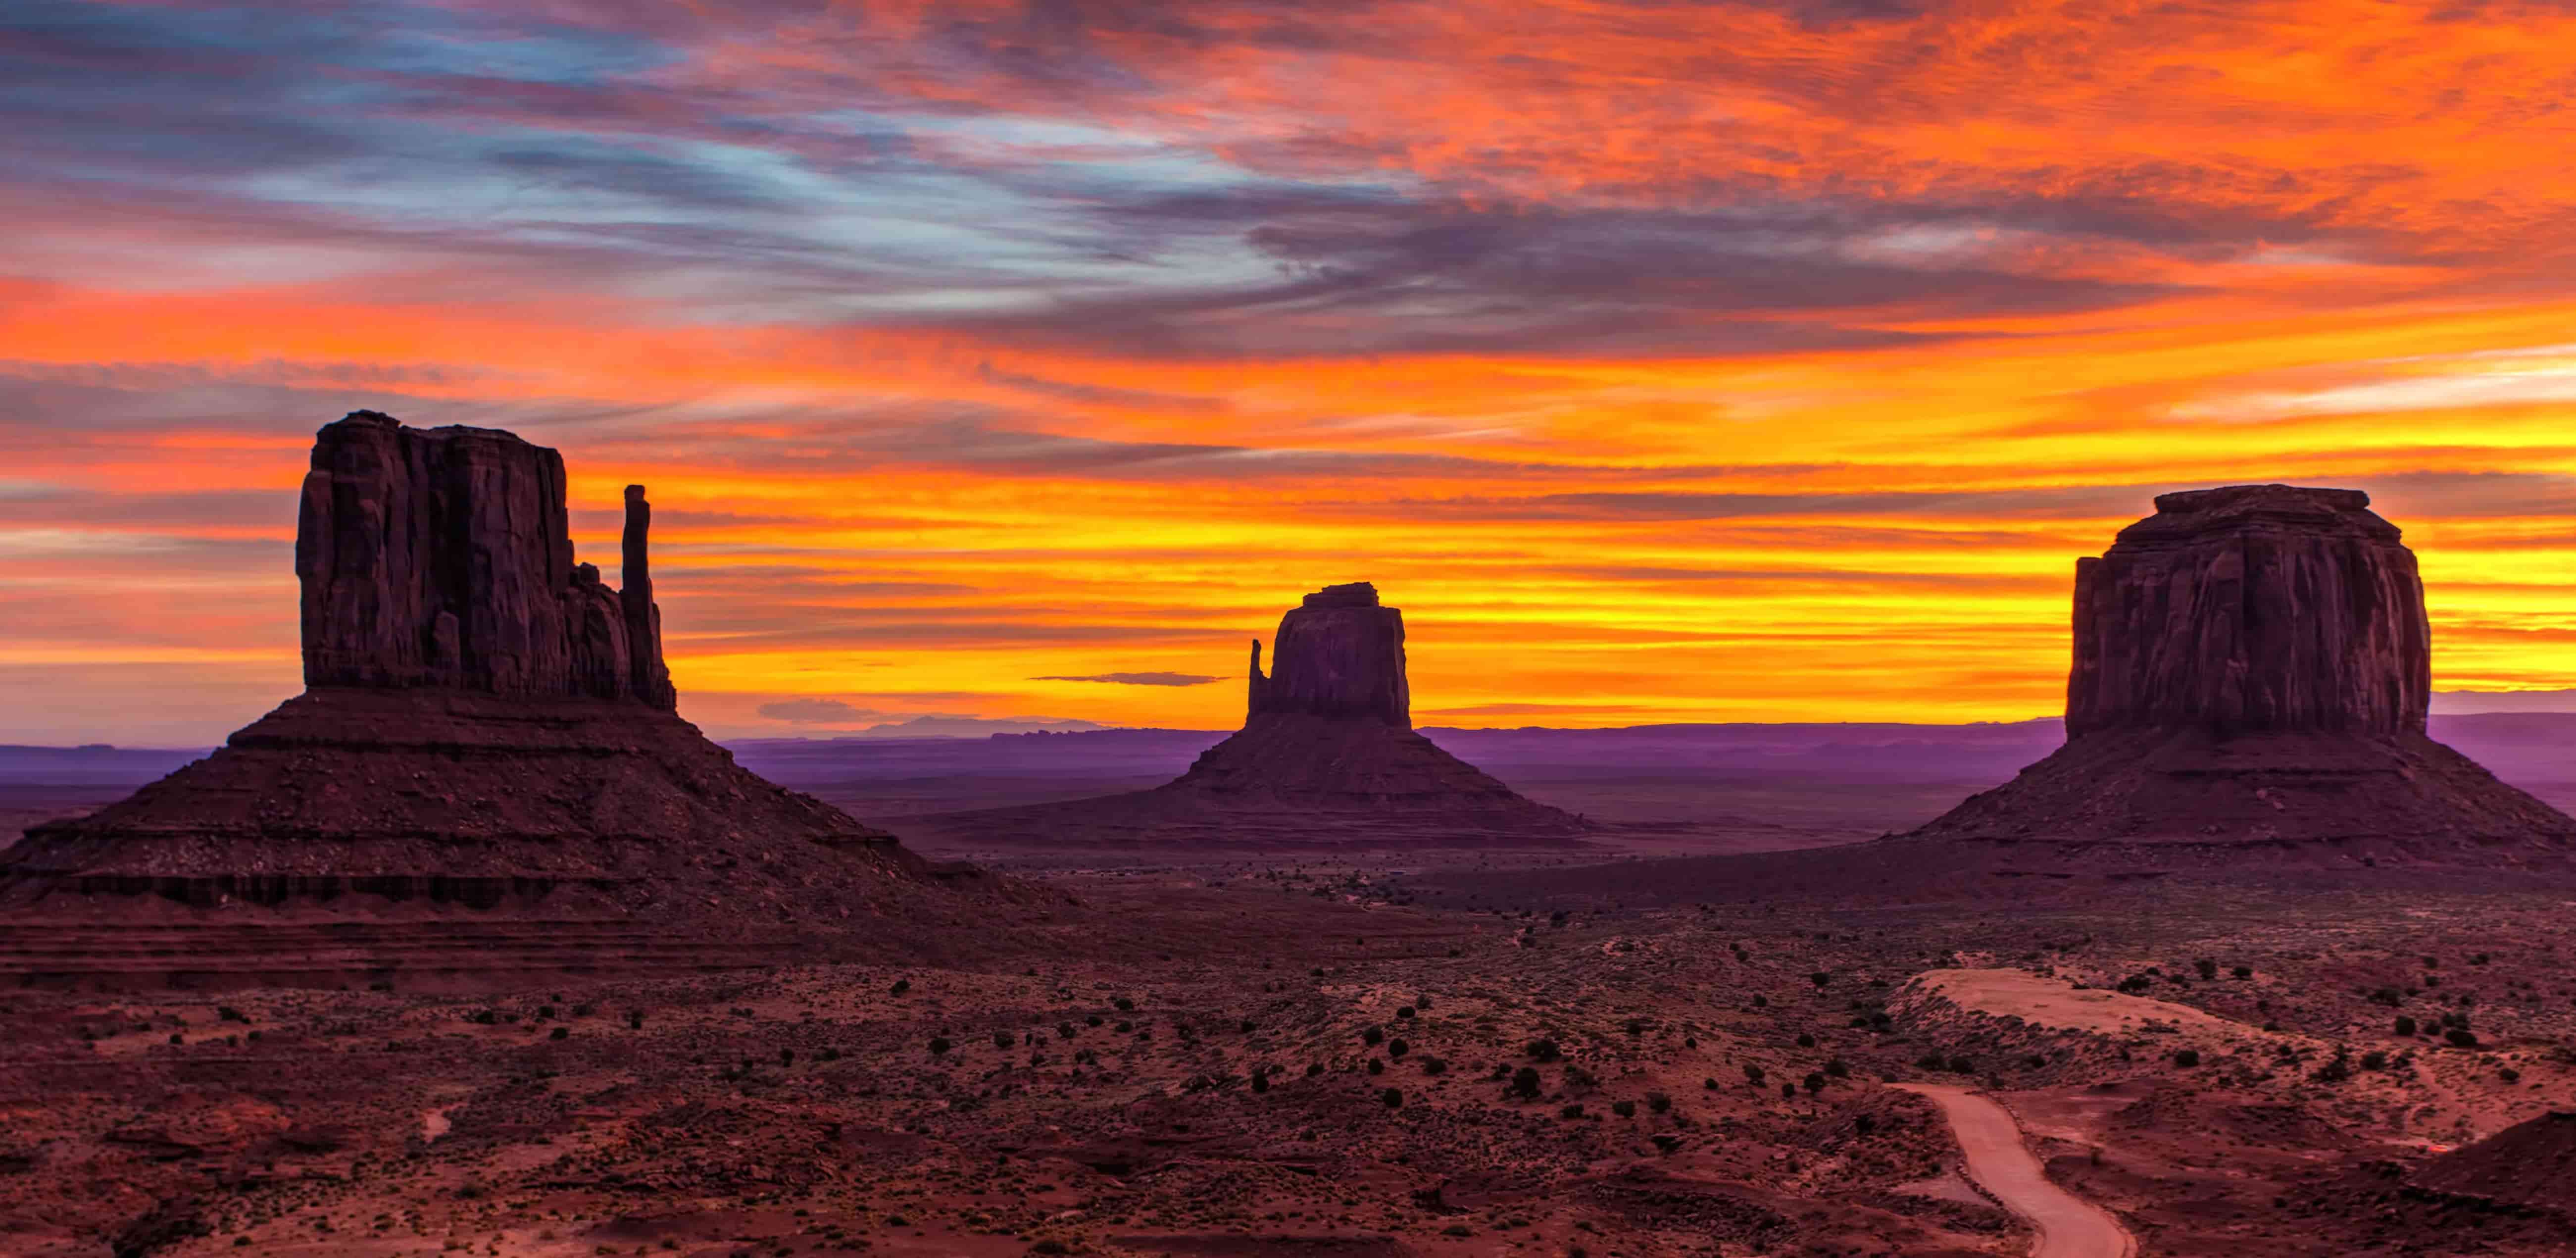 Visit Arizona's famous Monument Valley